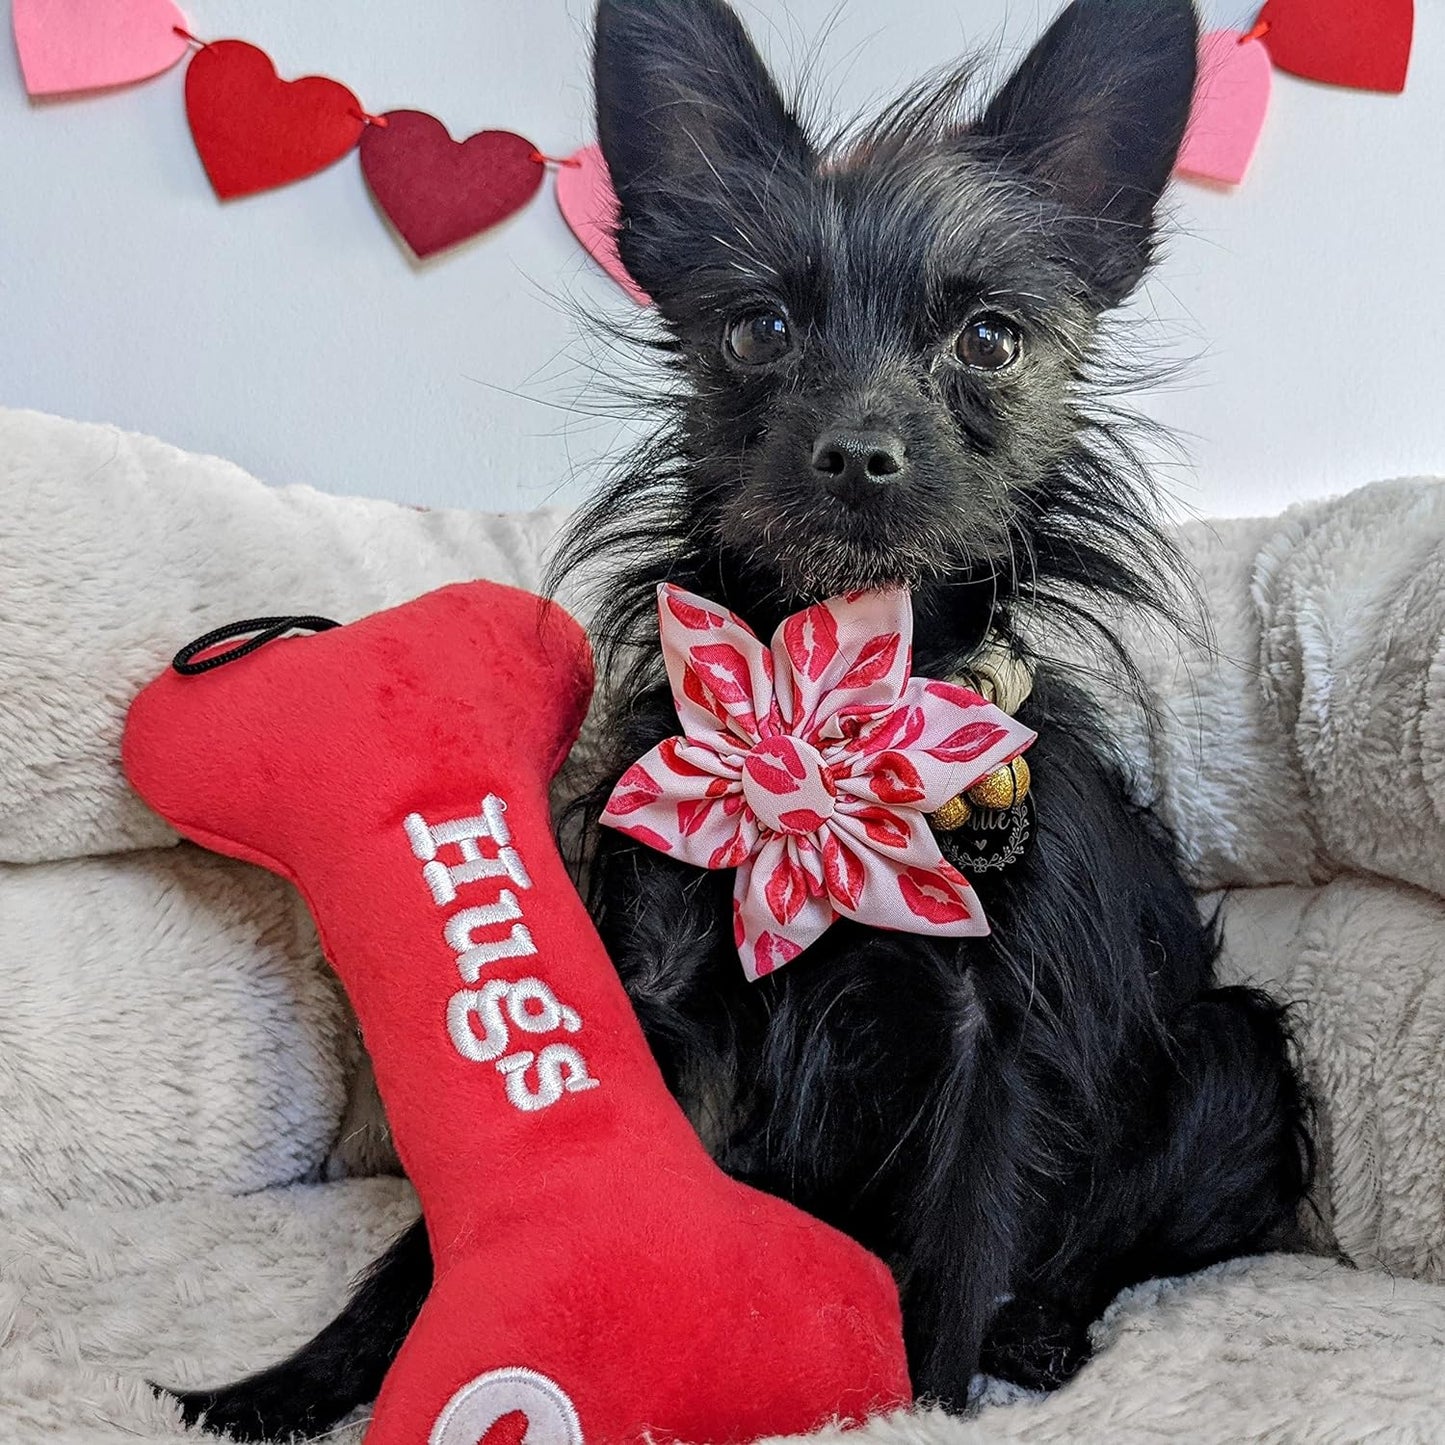 Lulubelles Valentine's Day Hugs and Kisses Plush Squeaky Dog Bone (Large 12")